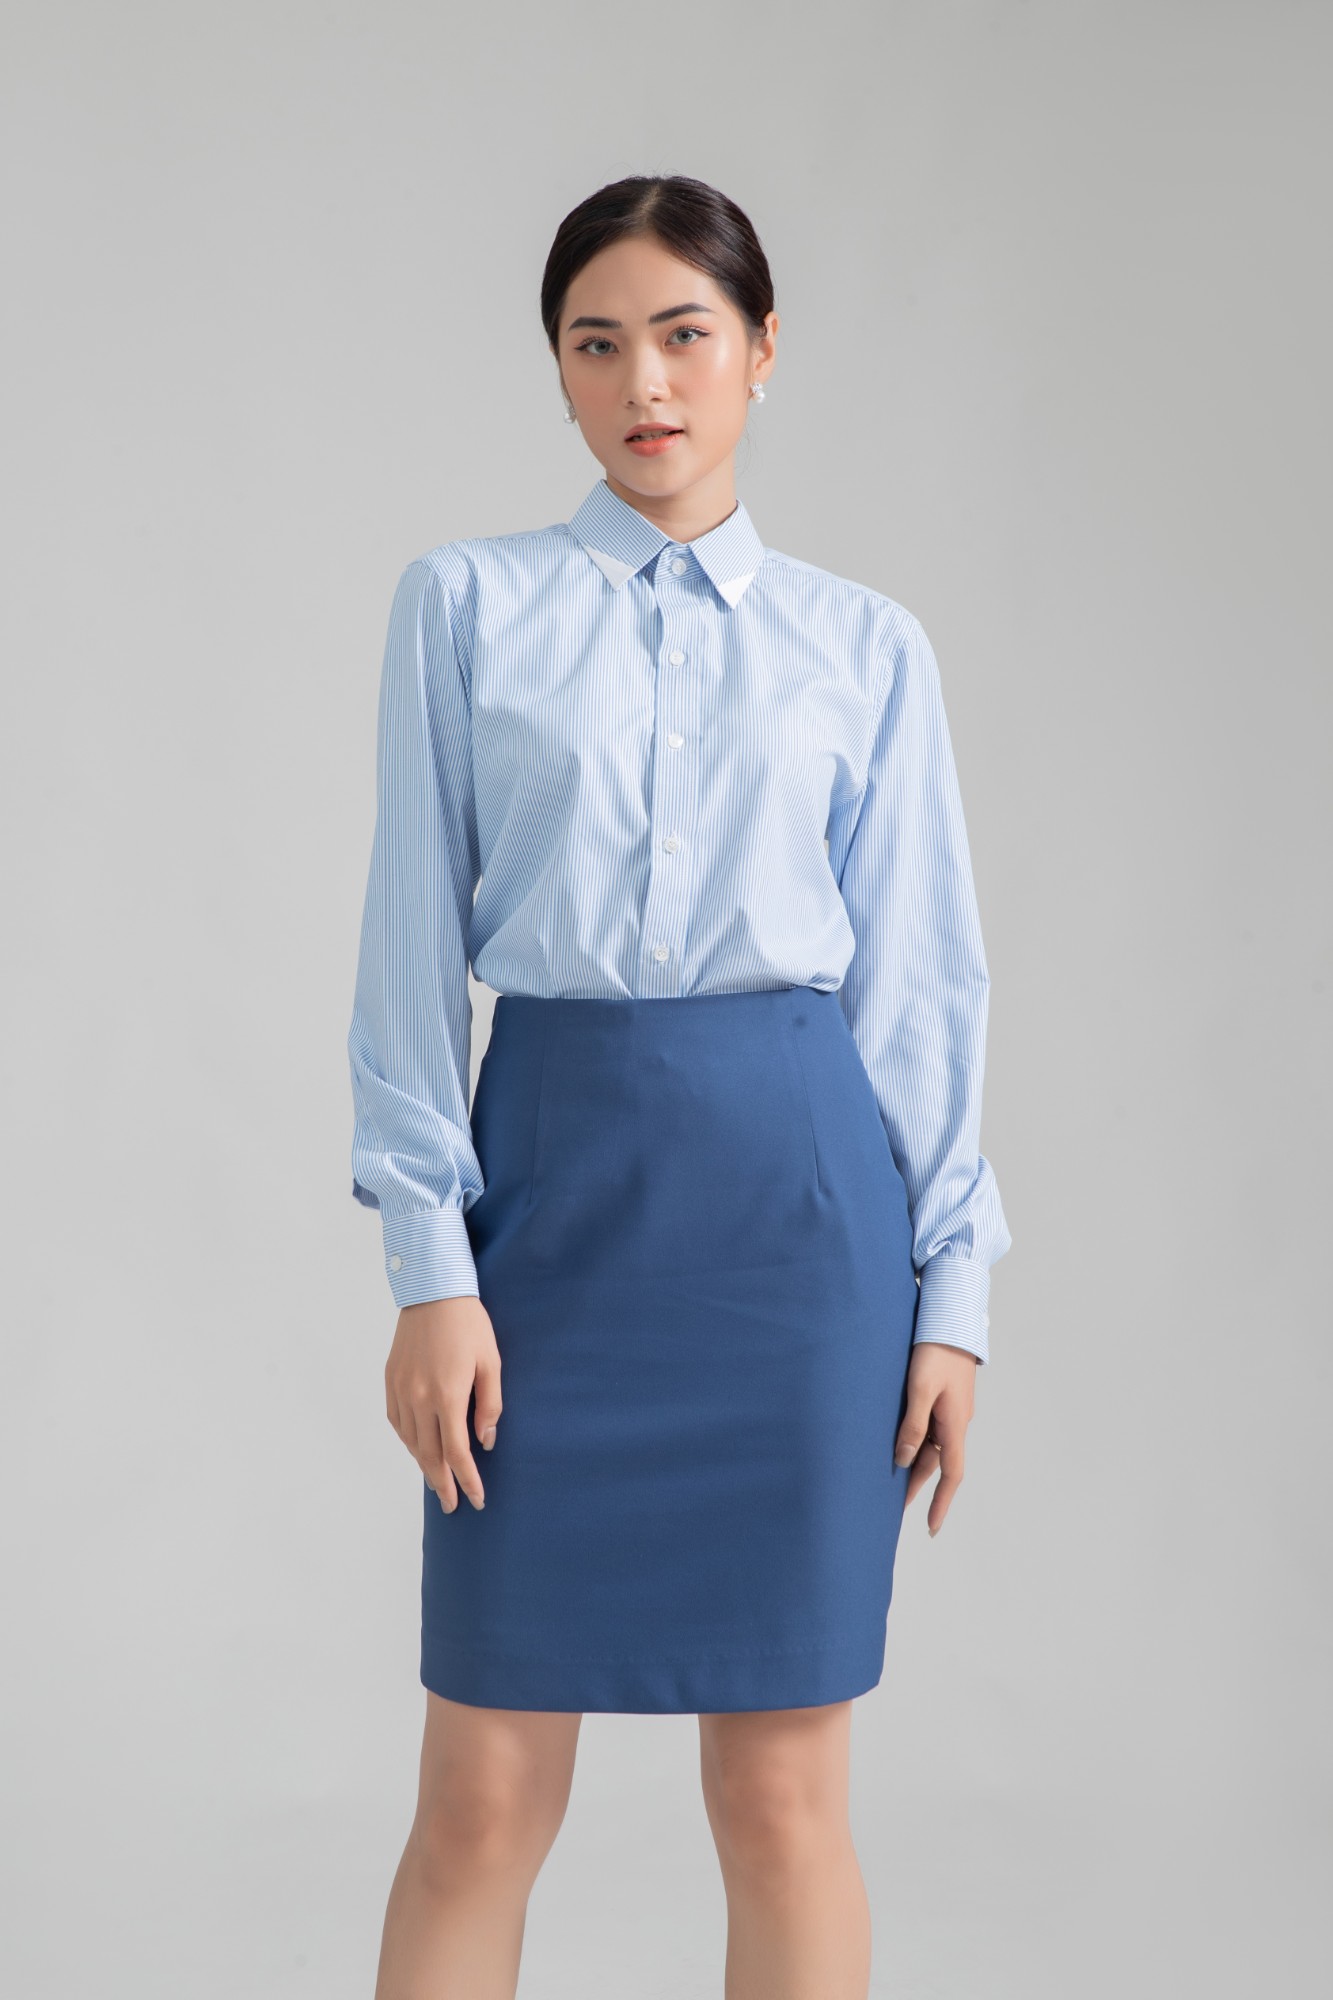 Áo Sơ Mi Nữ Basic vải modal siêu mát - Sọc xanh